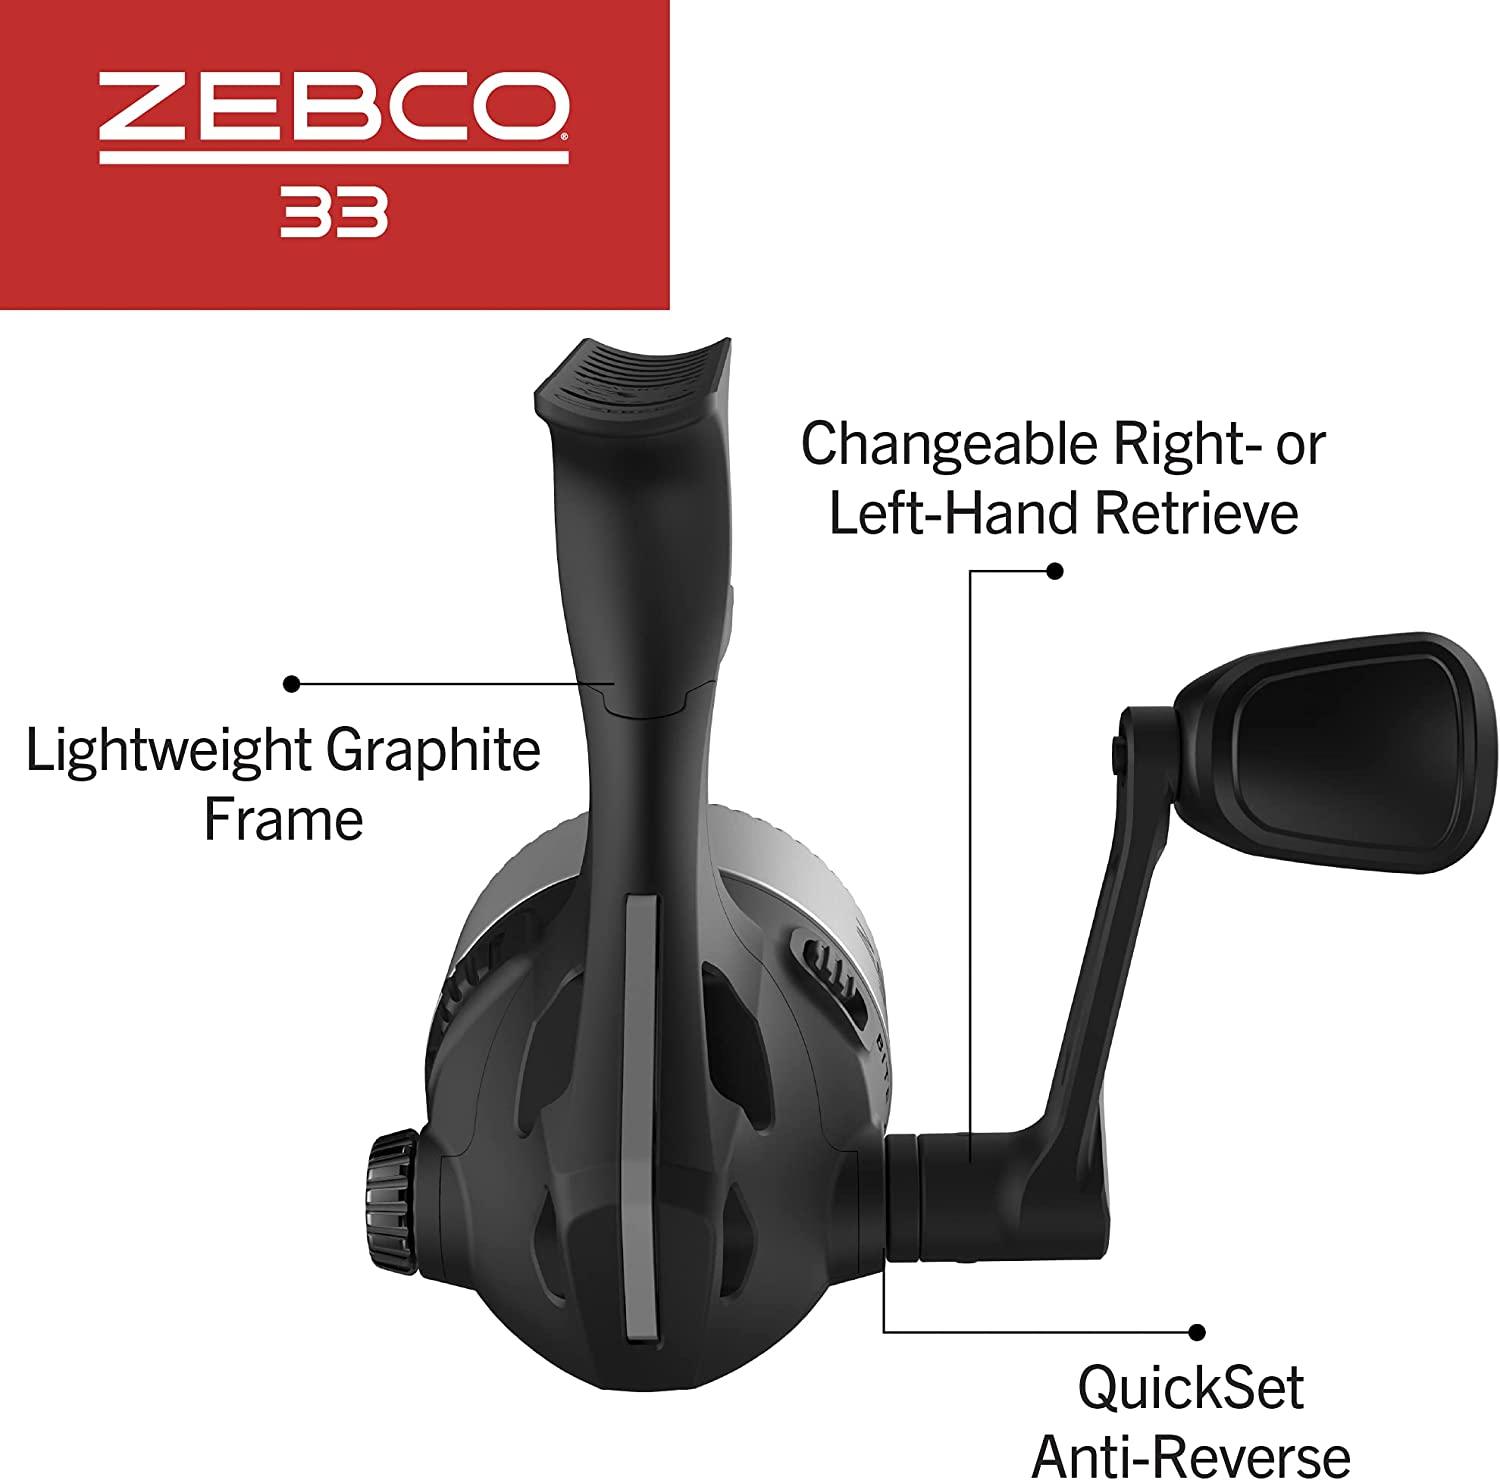 Zebco 33 Micro Triggerspin Reel